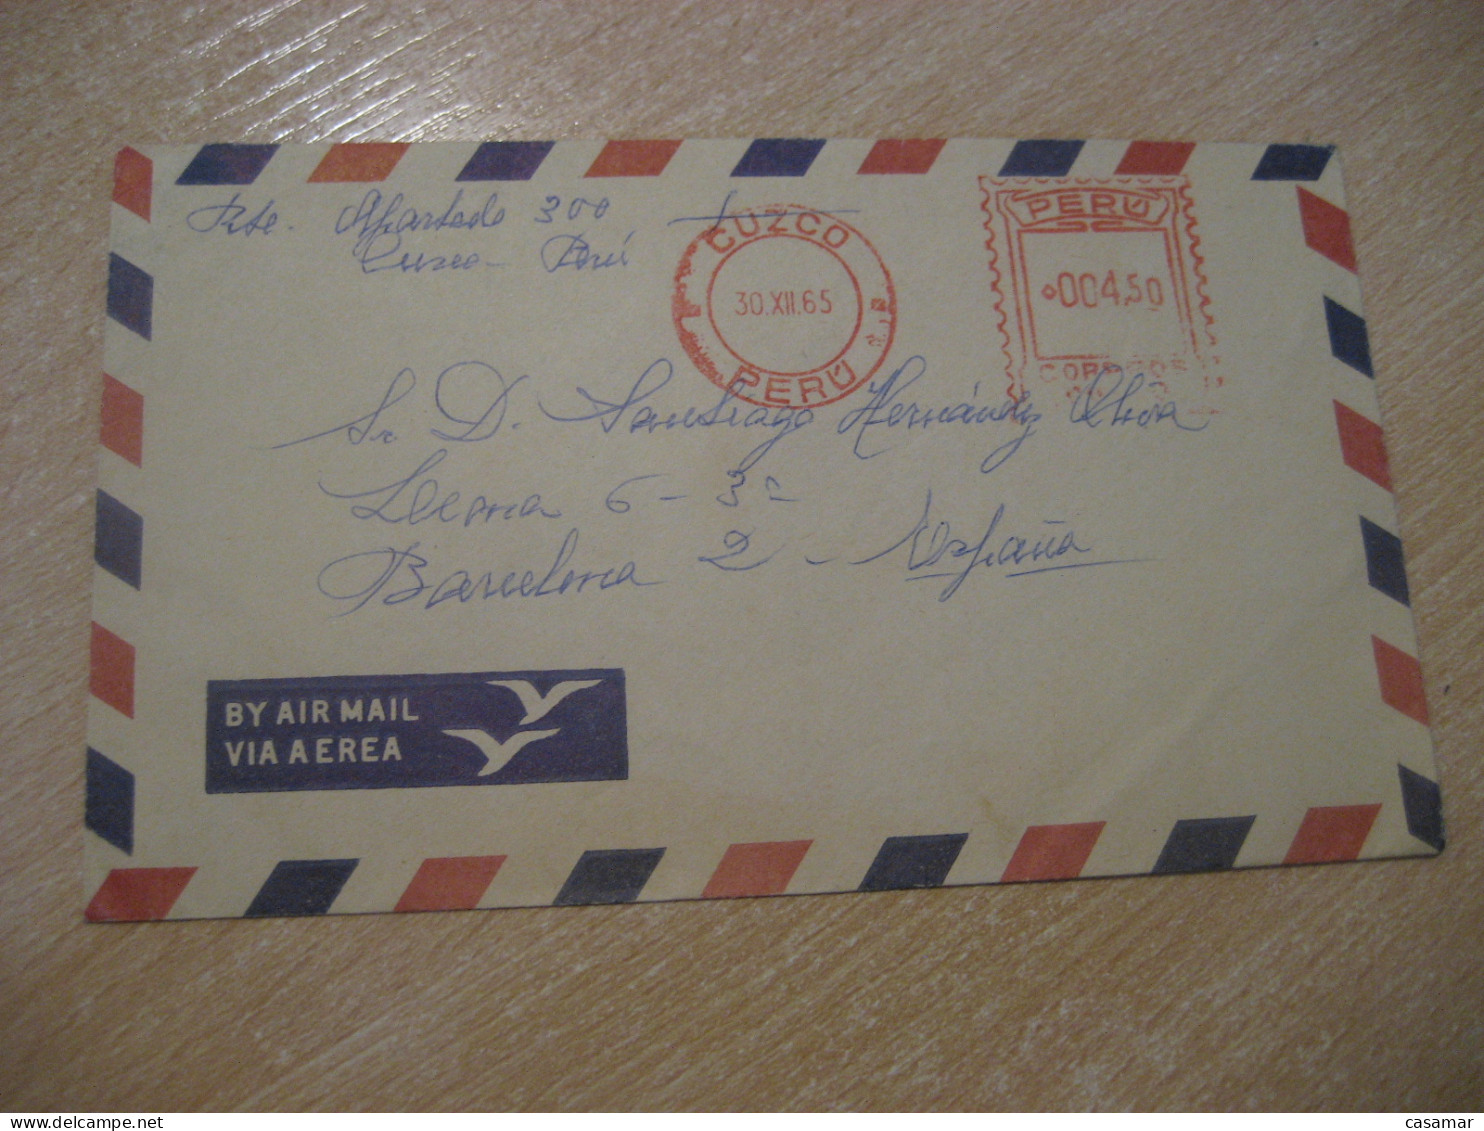 CUZCO 1965 To Barcelona Spain Meter Mail Cancel Cover PERU - Perú